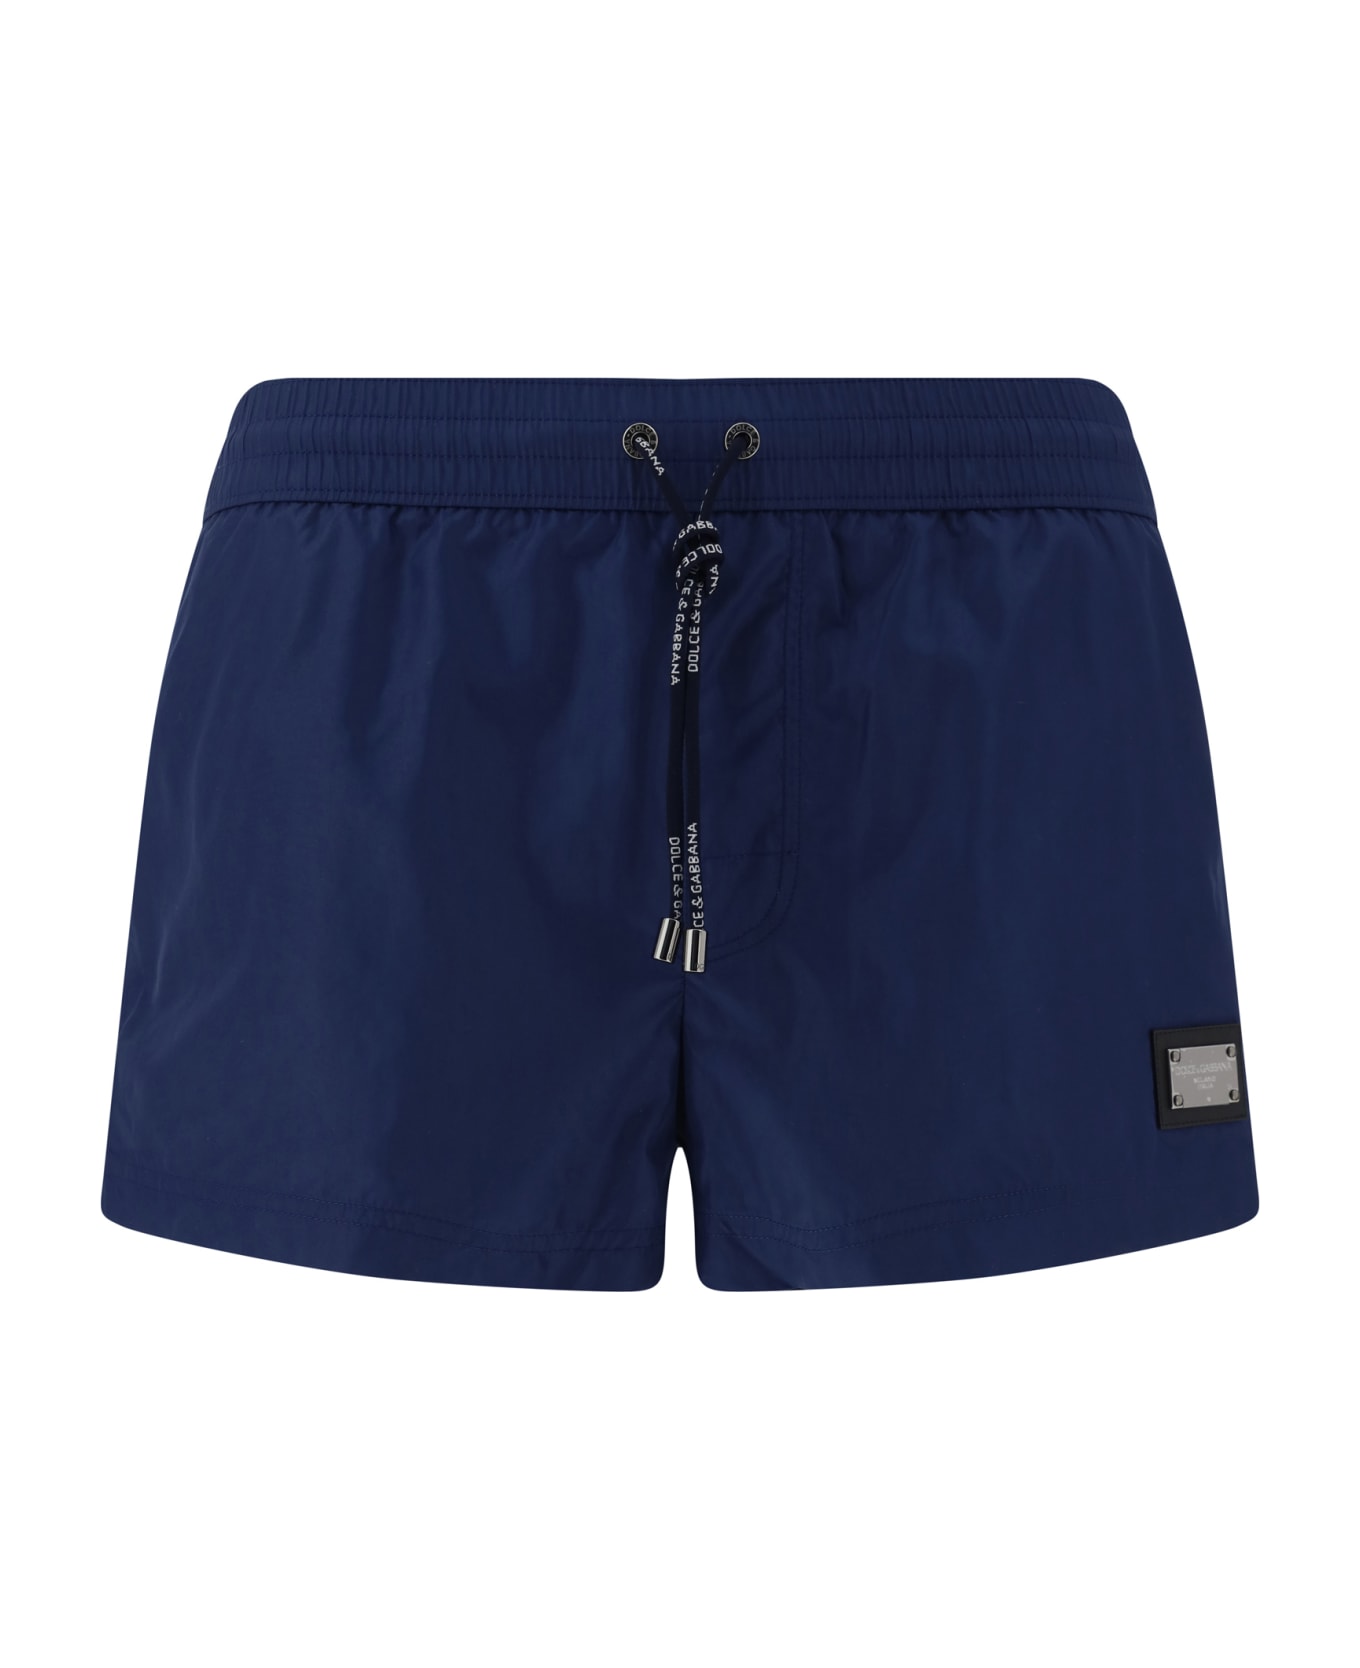 Dolce & Gabbana Logo Print Swim Shorts - Blu Scuro 水着